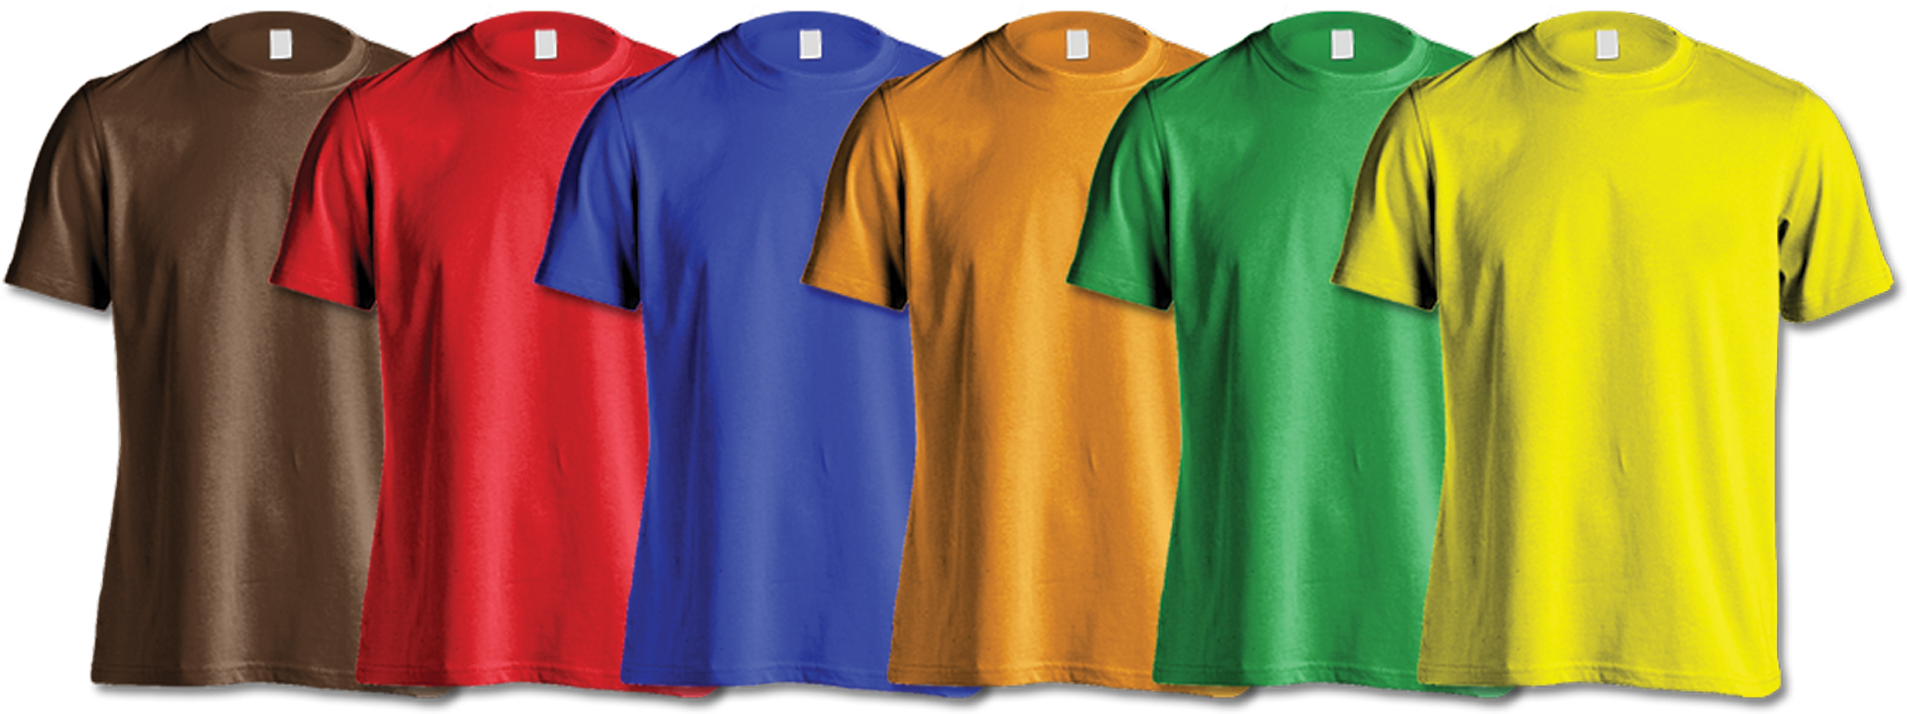 Saving Money On Your Custom T Shirts Colorful